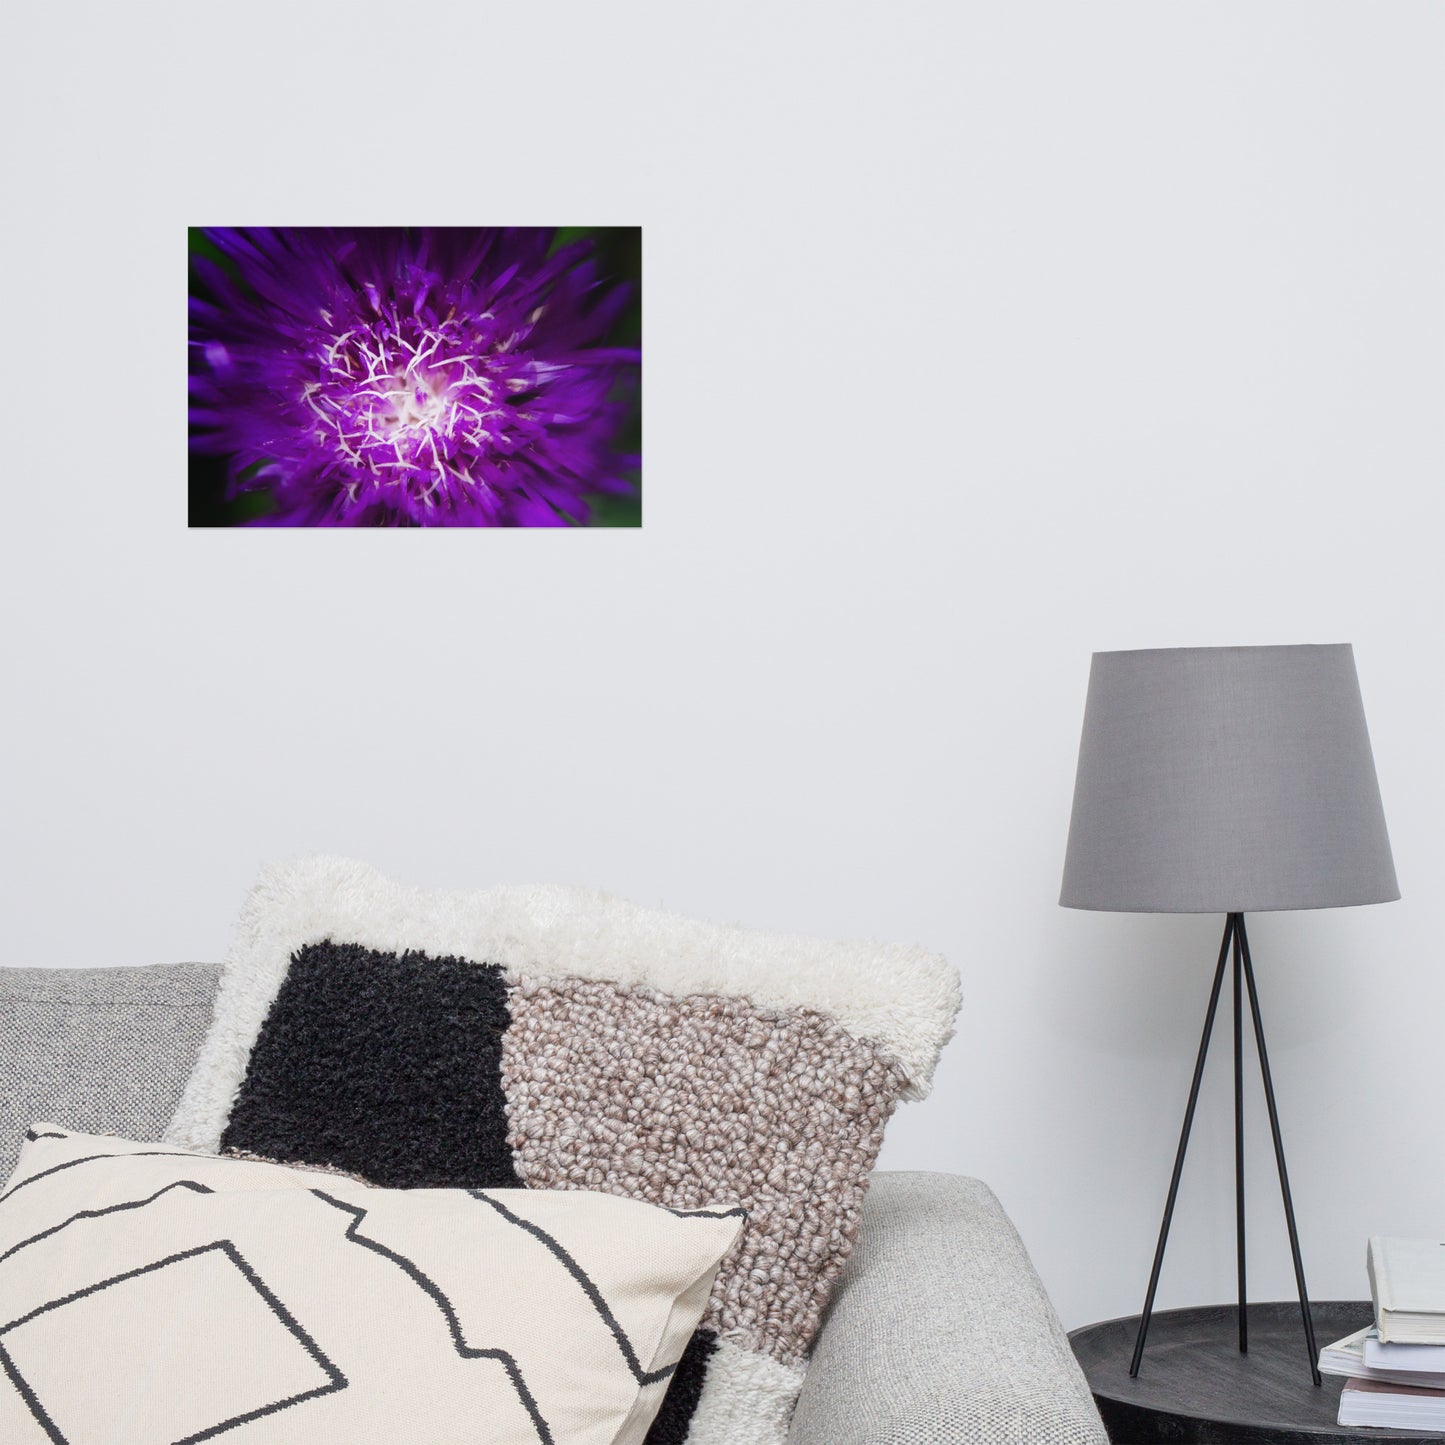 Living Room Wall Art Nature: Dark Purple and White Aster Bloom Close-up - Botanical / Floral / Flora / Flowers / Nature Photograph Loose / Unframed / Frameless / Frameable Wall Art Print - Artwork